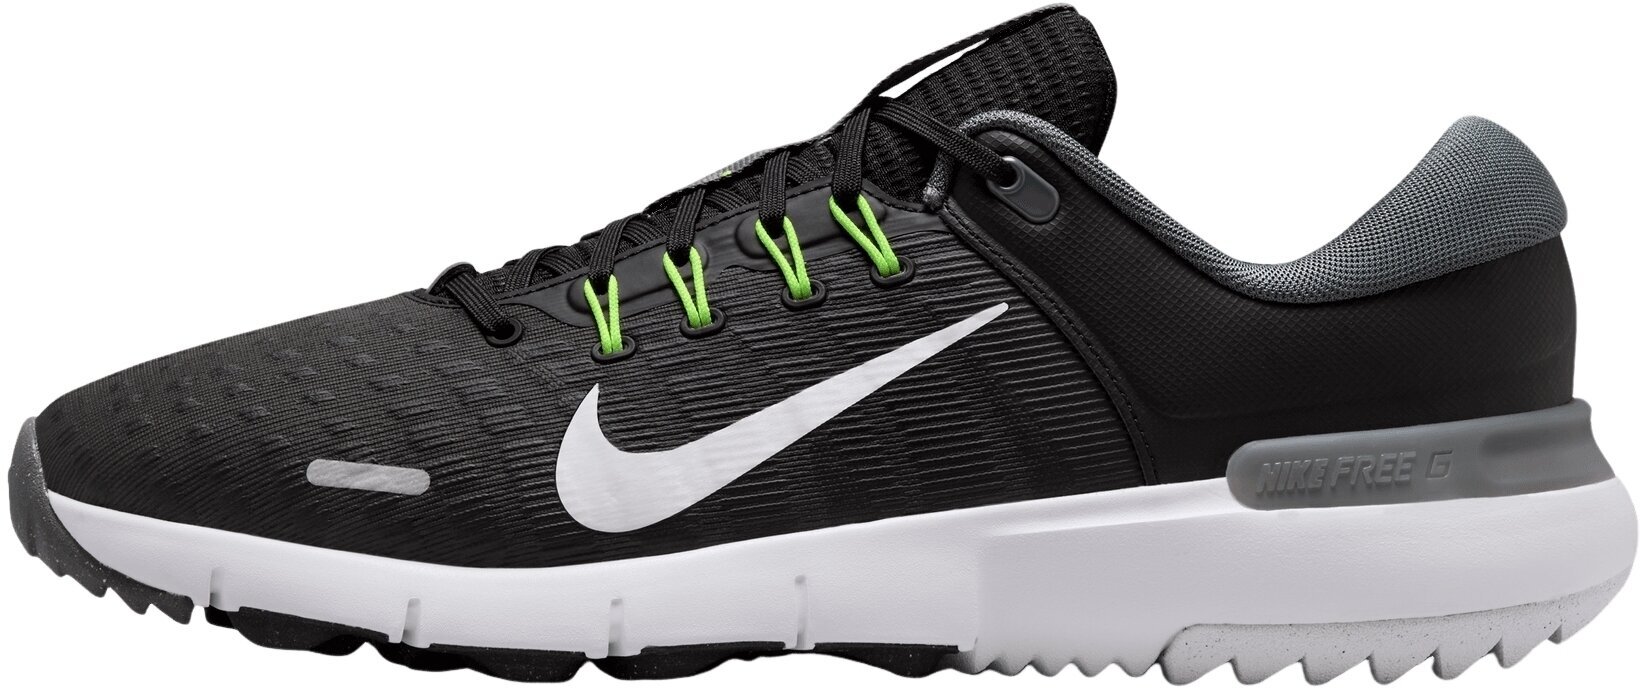 Men's golf shoes Nike Free Golf Unisex Shoes Black/White/Iron Grey/Volt 41